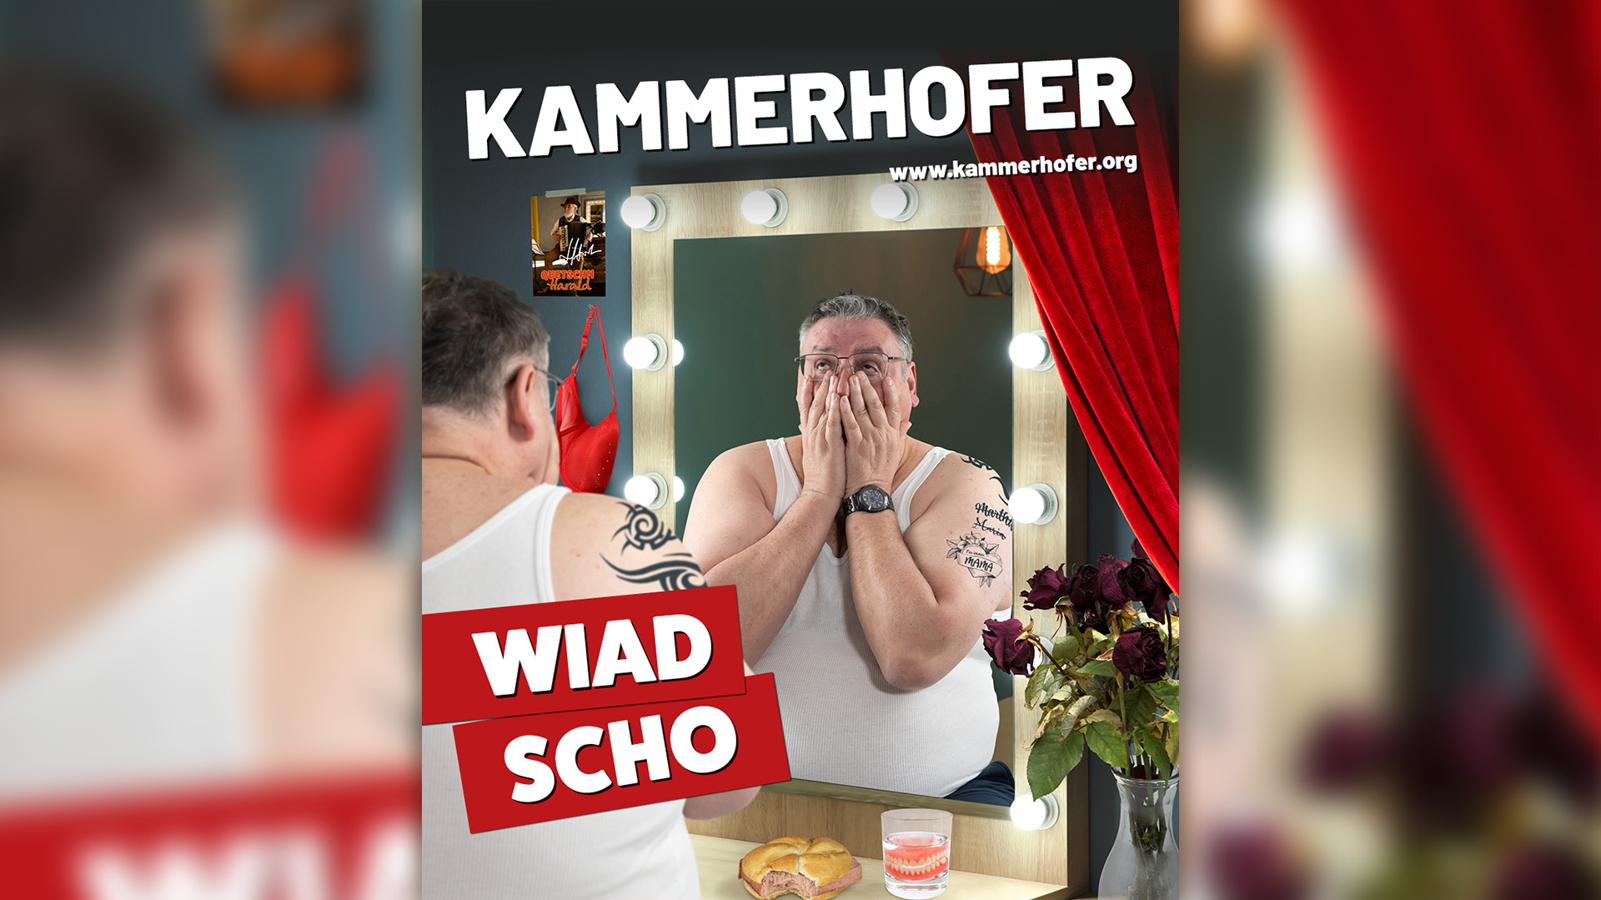 Walter Kammerhofer